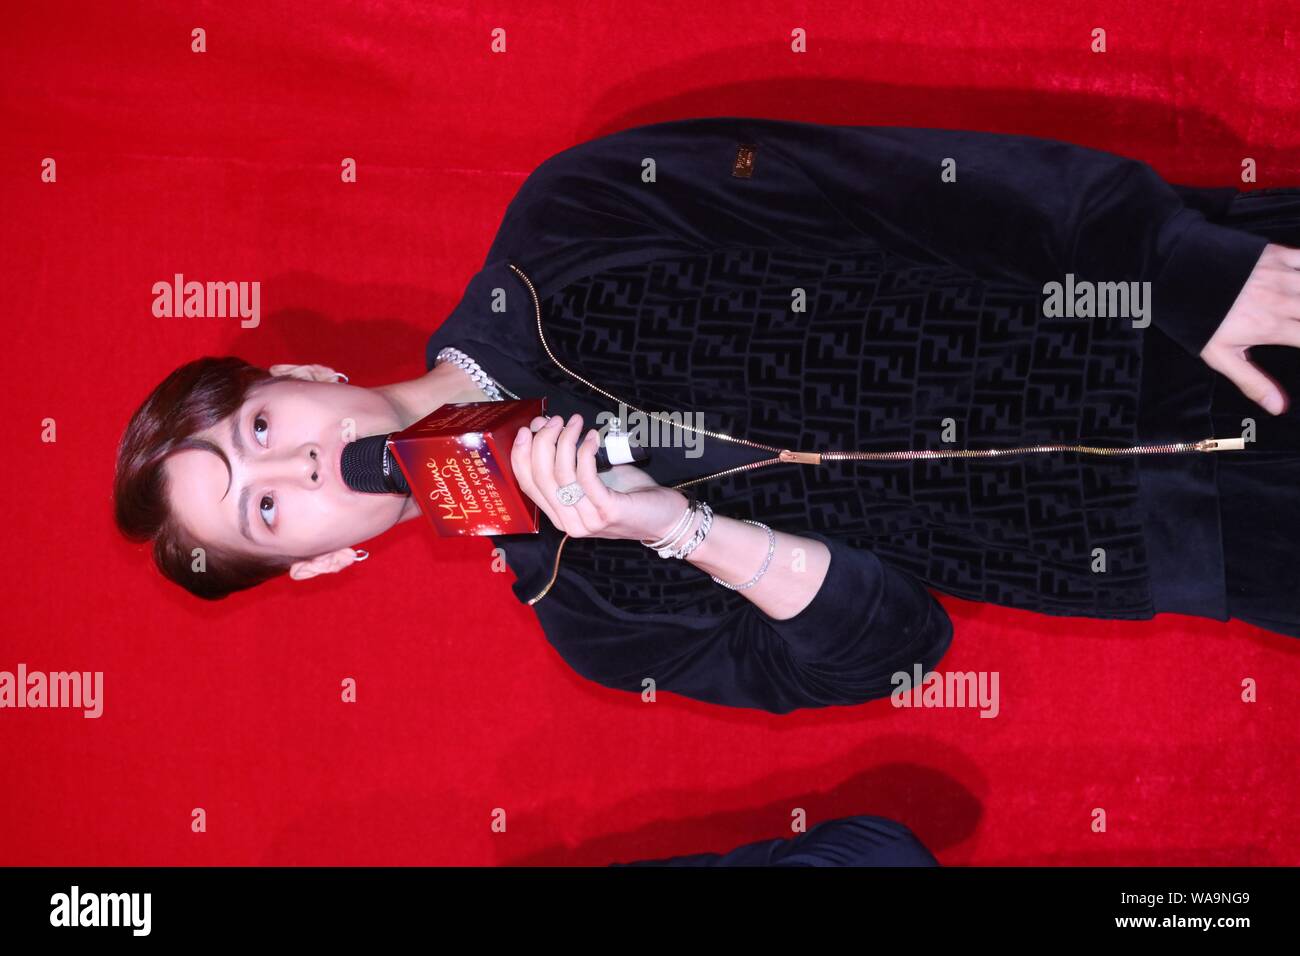 Hong Kong Sänger und Schauspieler Jackson Wang der Koreanischen Boy Group erhielt 7 Nimmt eine enthüllungsfeier für seine Wachsfigur bei Madame Tussauds Hong Kong w Stockfoto